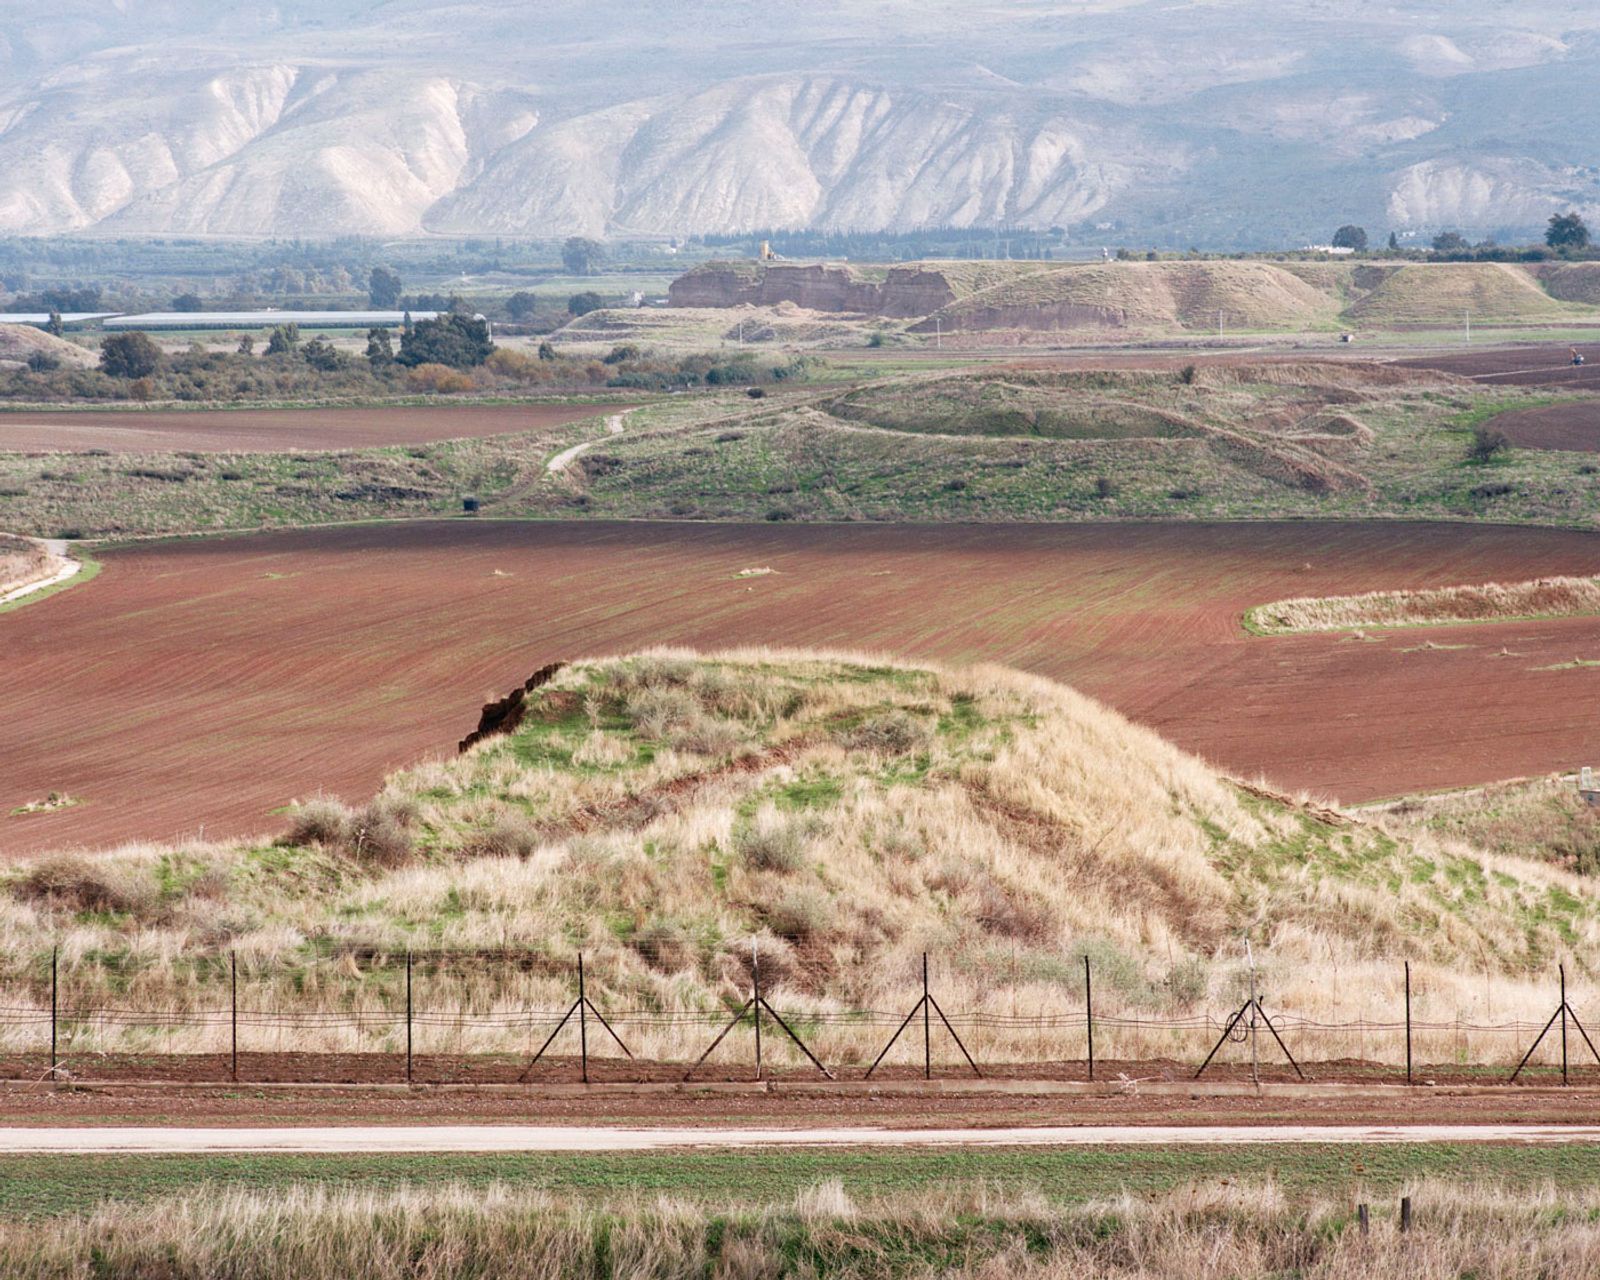 © Roei Greenberg - Jordanian Border, view from highway 90 across the border, Jordan Valley, 2013